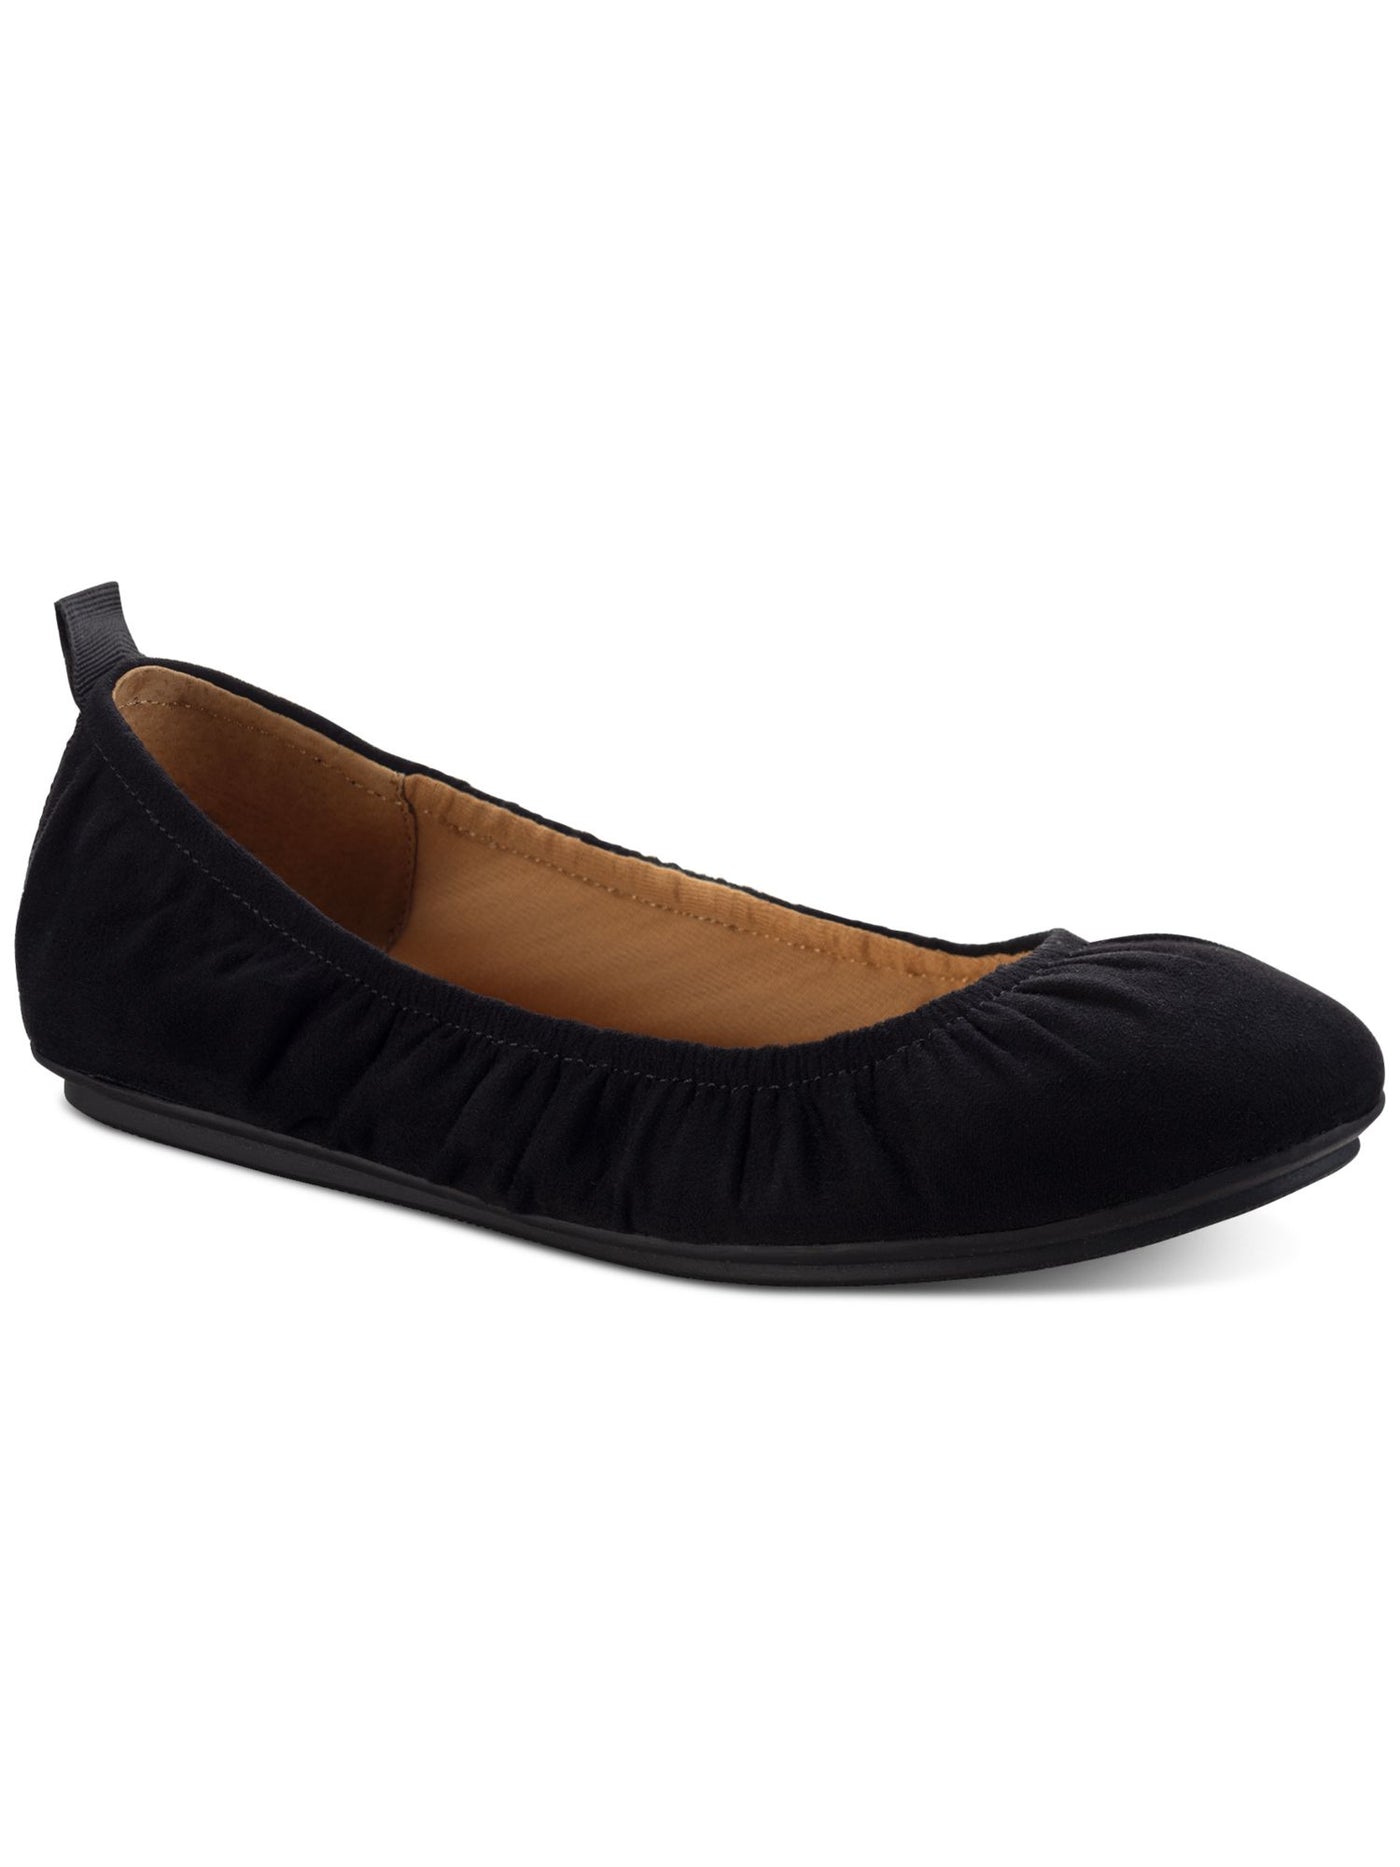 SUN STONE Womens Black Pull Tab Cushioned Stretch Sibyyl Round Toe Slip On Flats Shoes 5.5